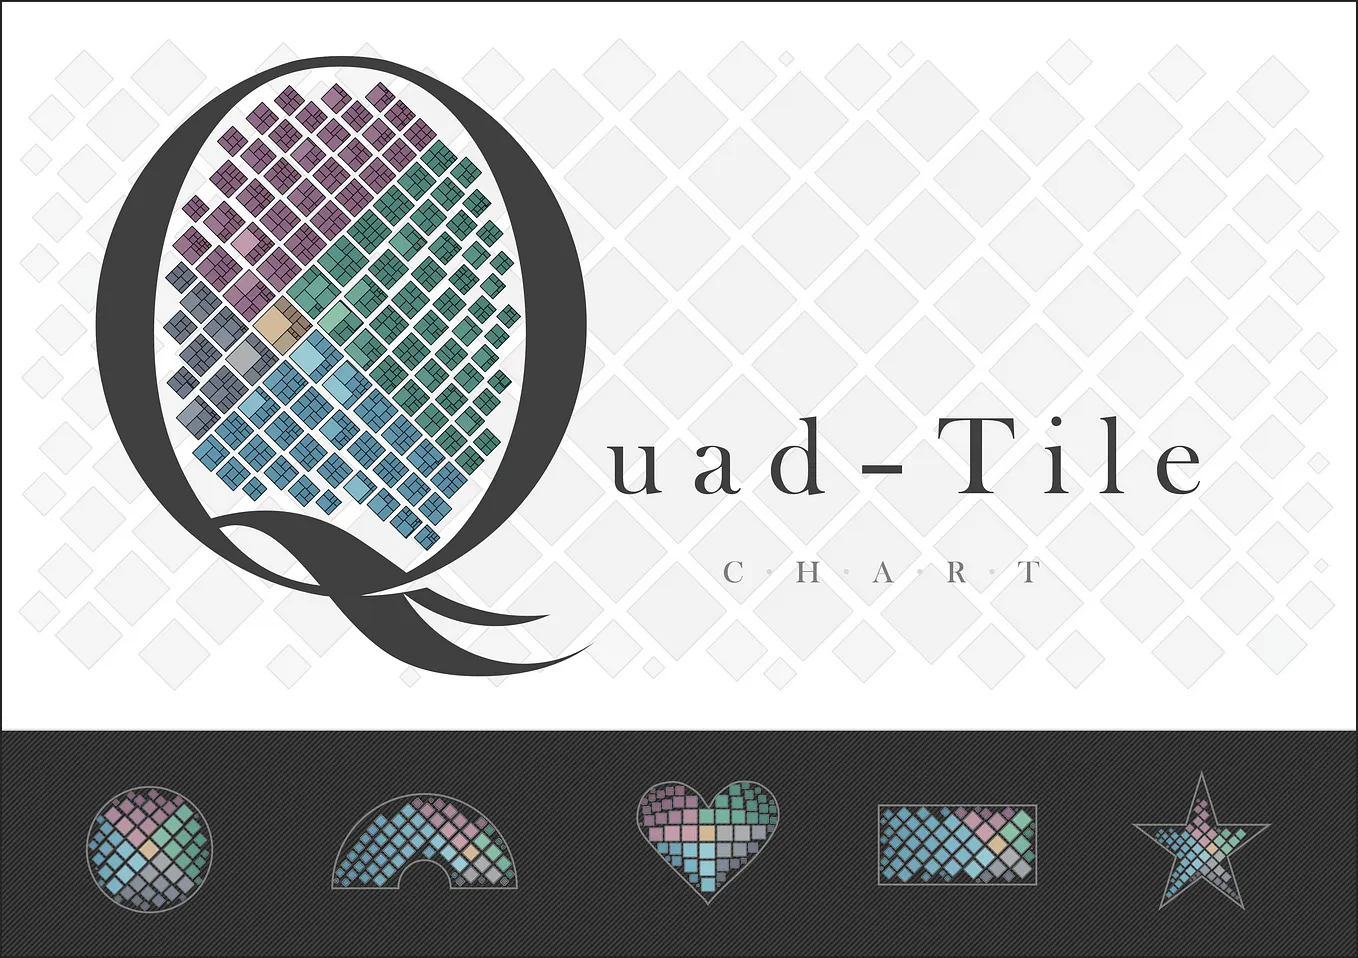 Introducing the Quad-Tile Chart & Squaremap: Squarify Your Data